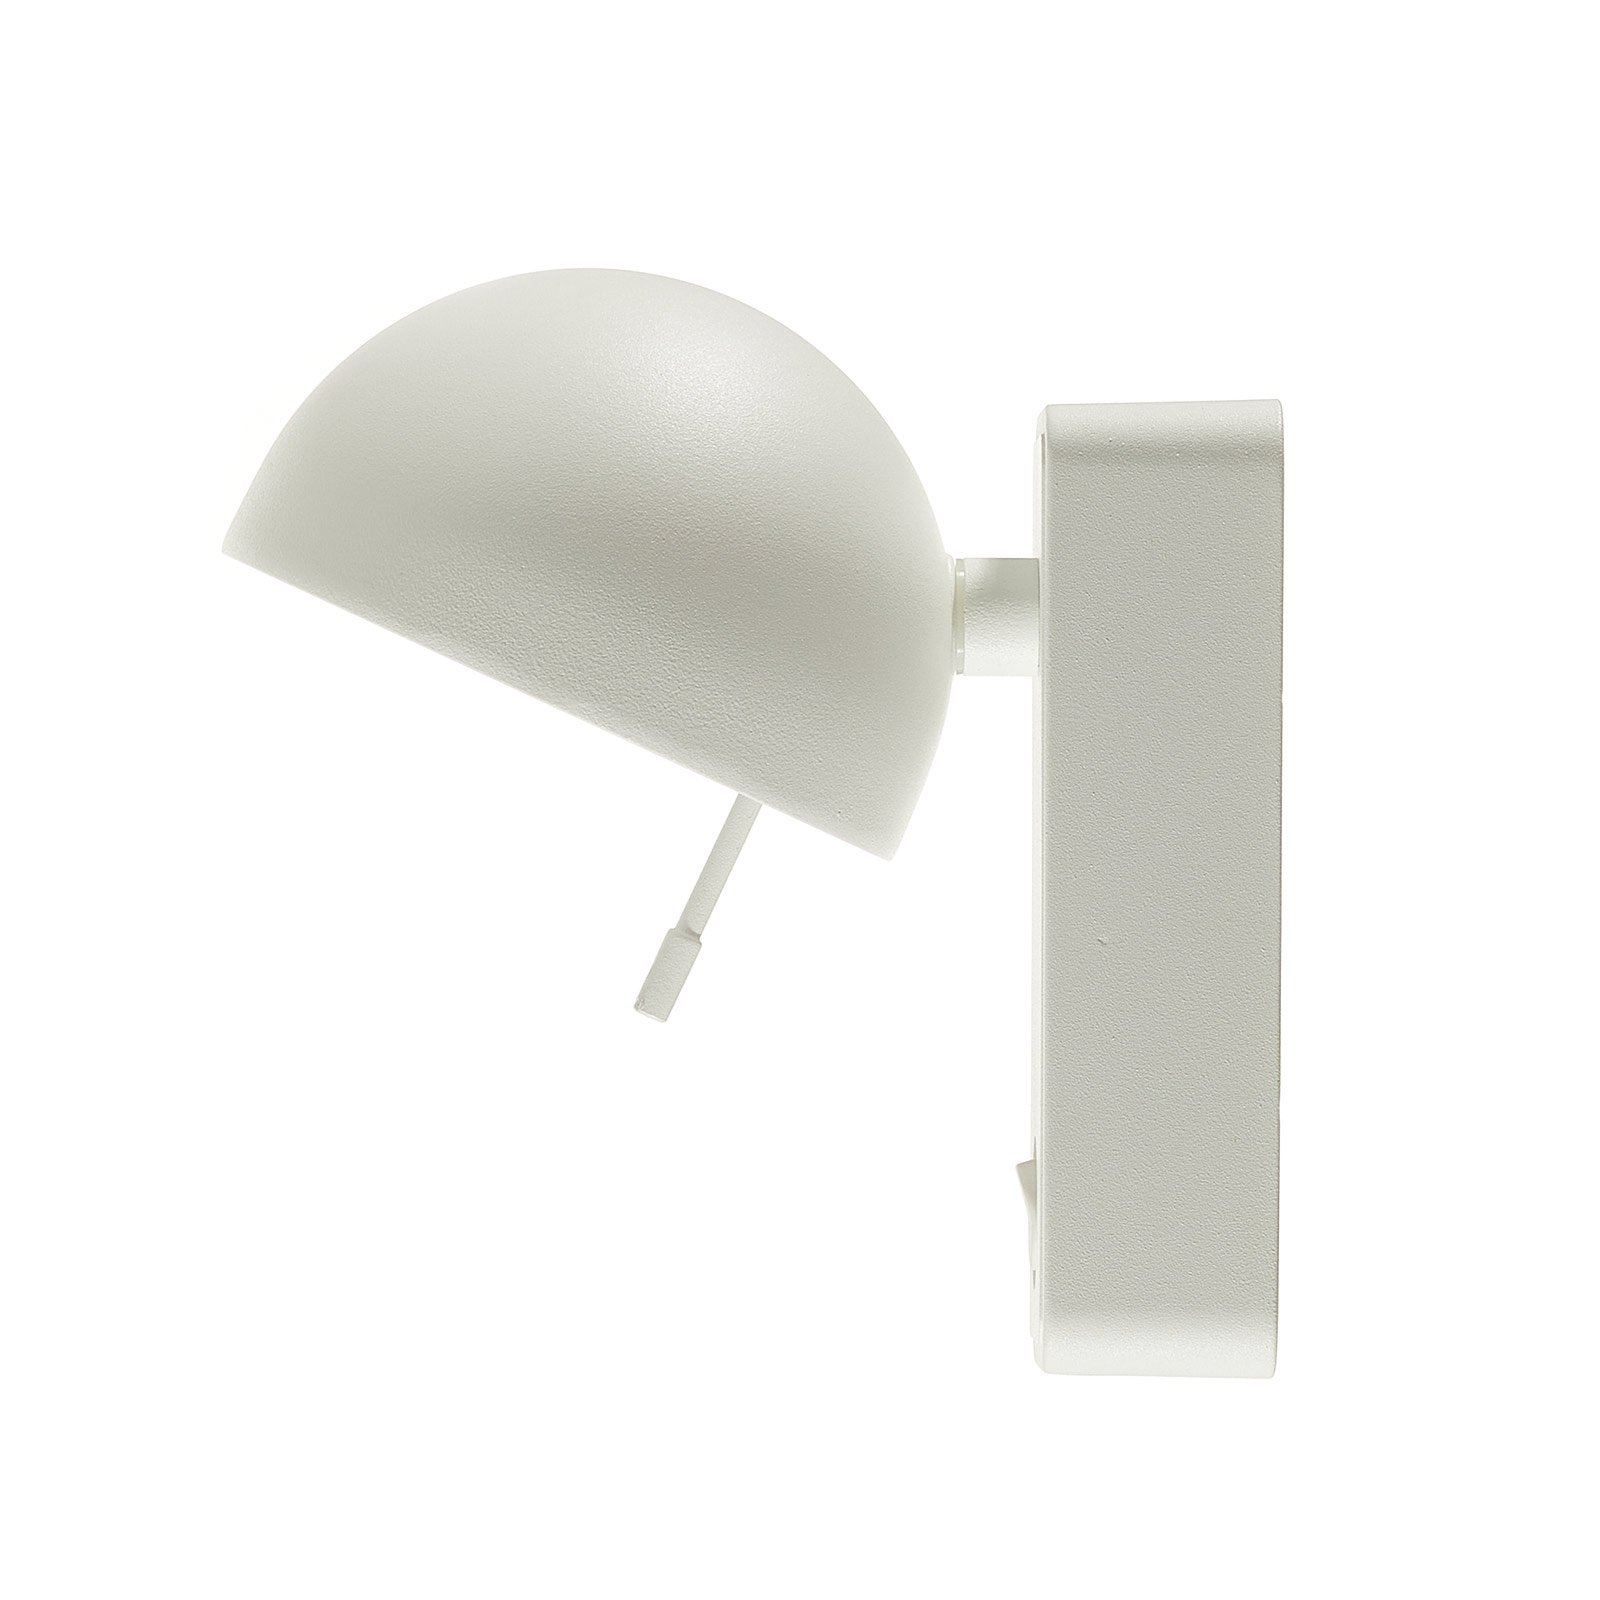 Bover Beddy A/01 applique LED rotatif blanc/blanc